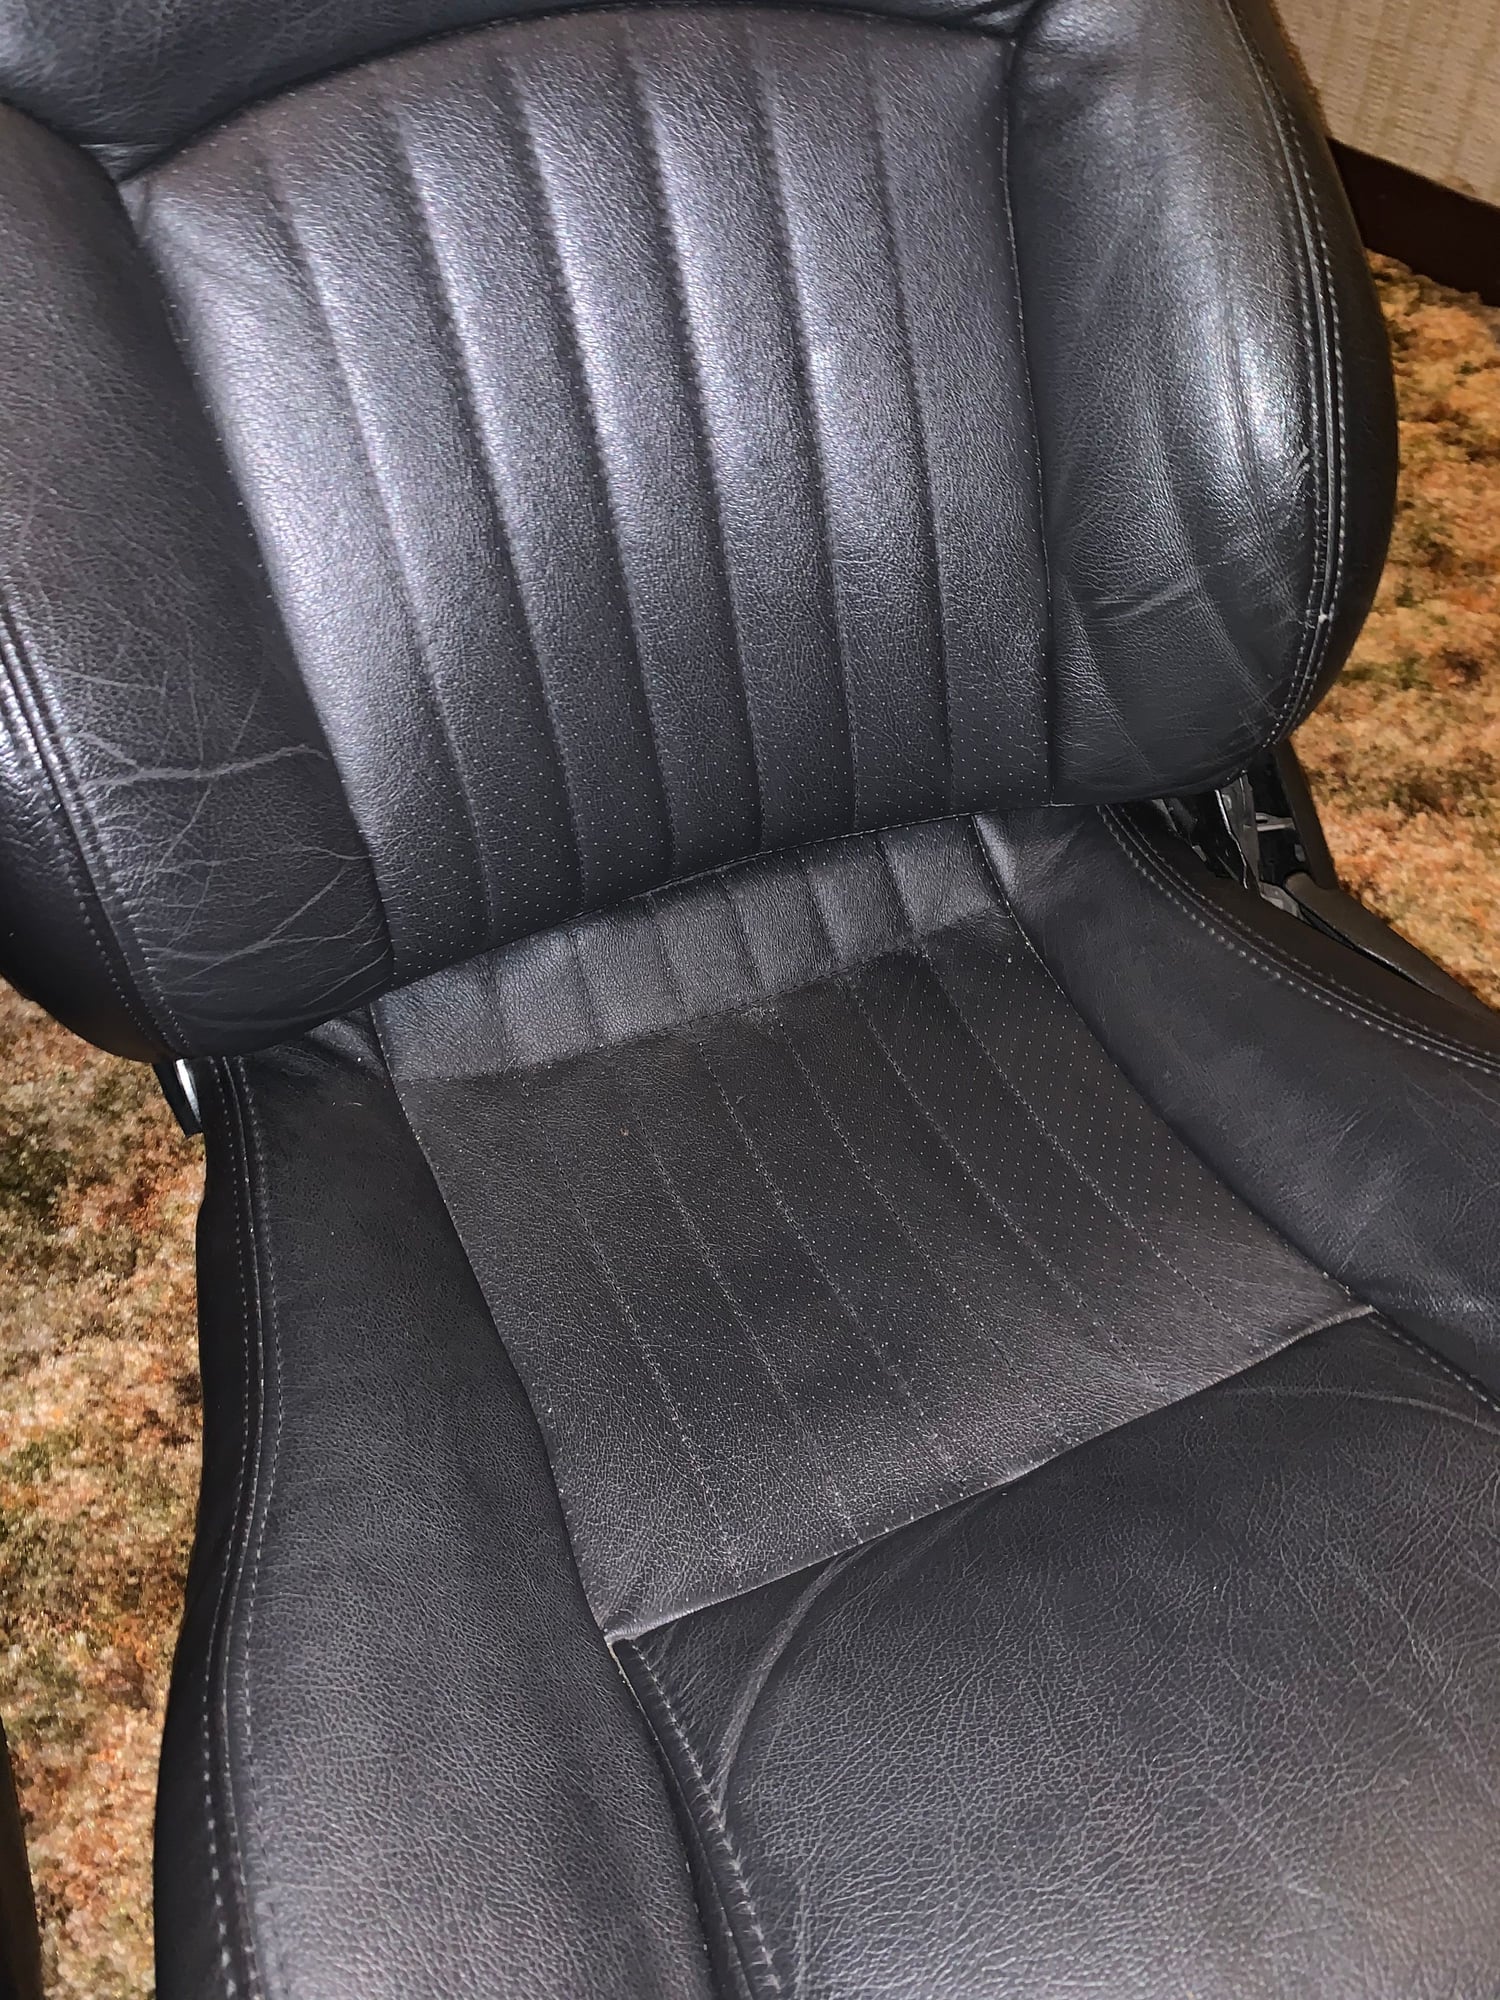  - Leather trans am ws6 power seats 4th gen f body firebird, ws6, firehawk, - Hutchinson, KS 67502, United States